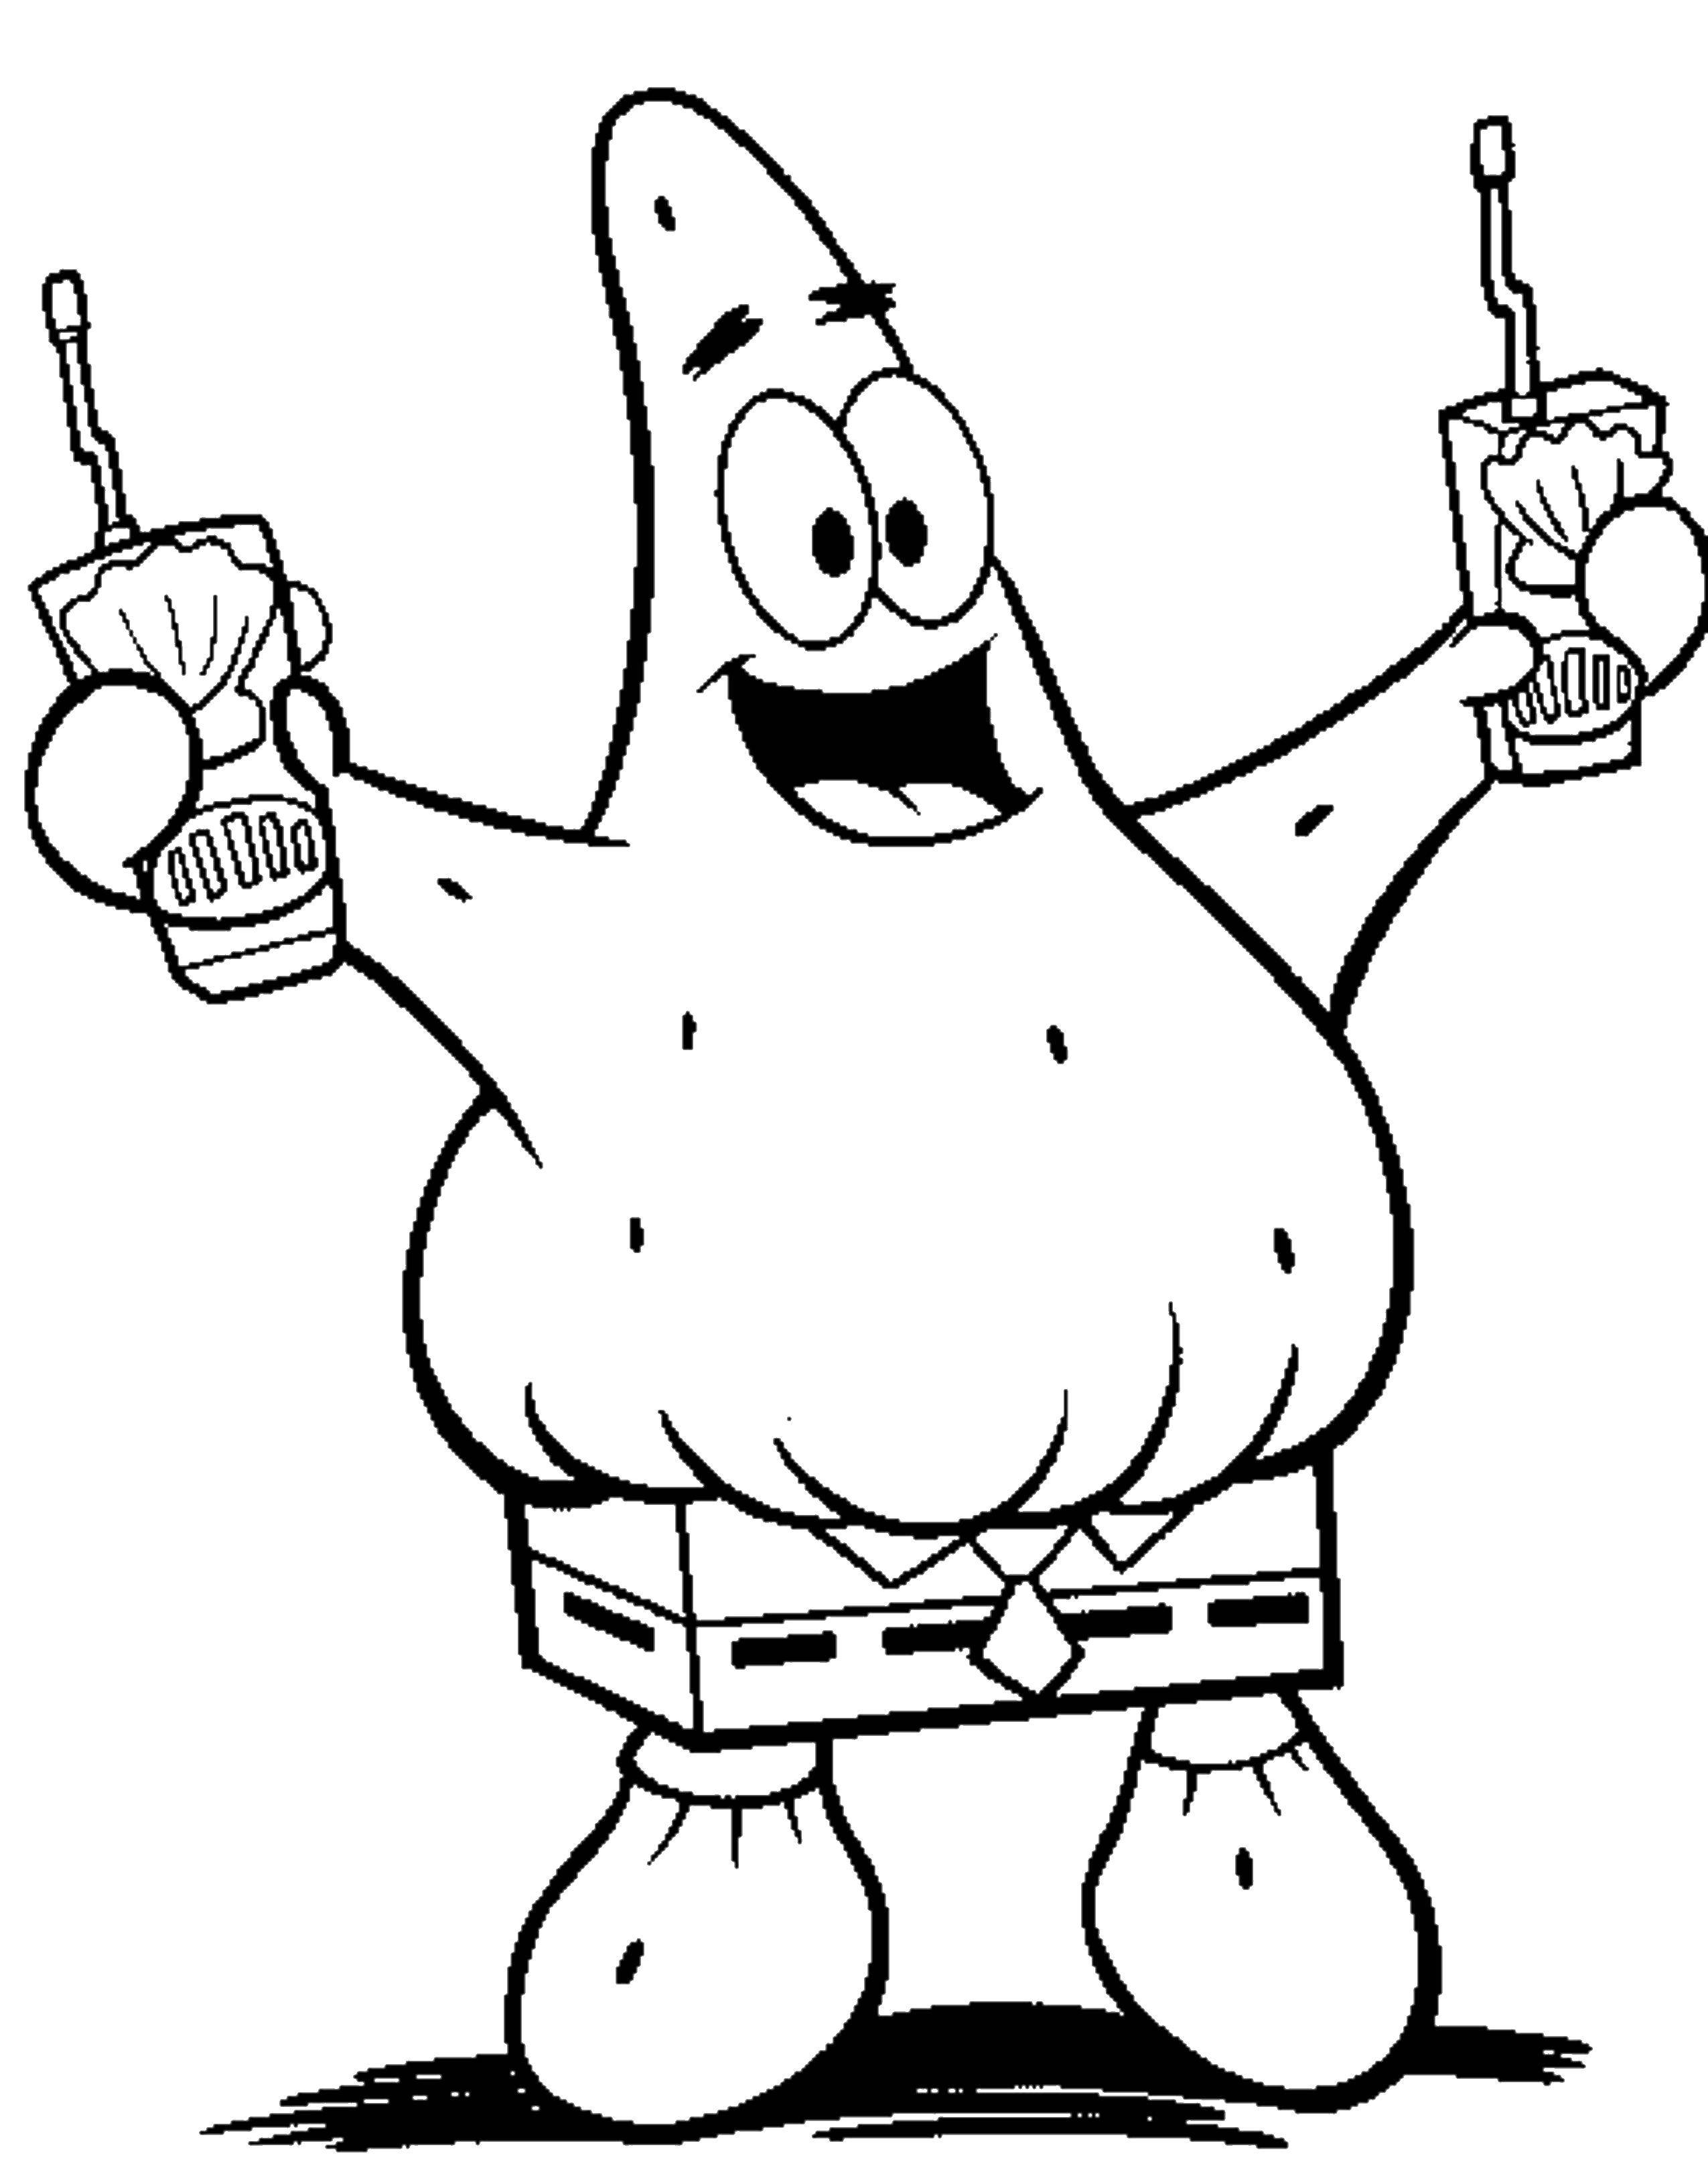 Coloring Patrick with walkie-talkies. Category Spongebob. Tags:  The spongebob, Patrick, cartoons.